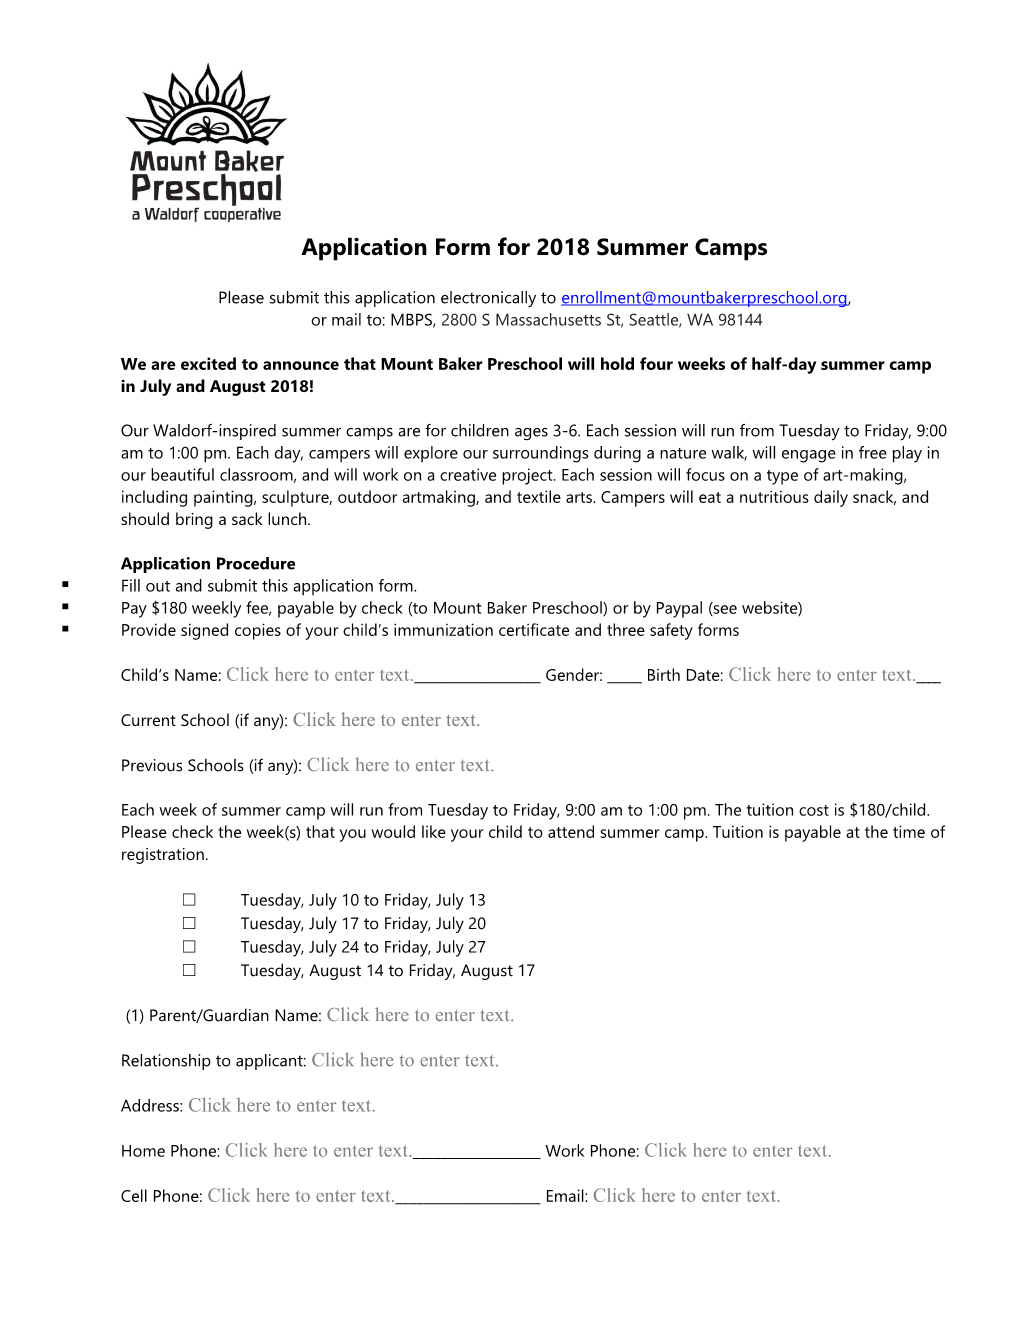 Mount Baker Preschool Application Information